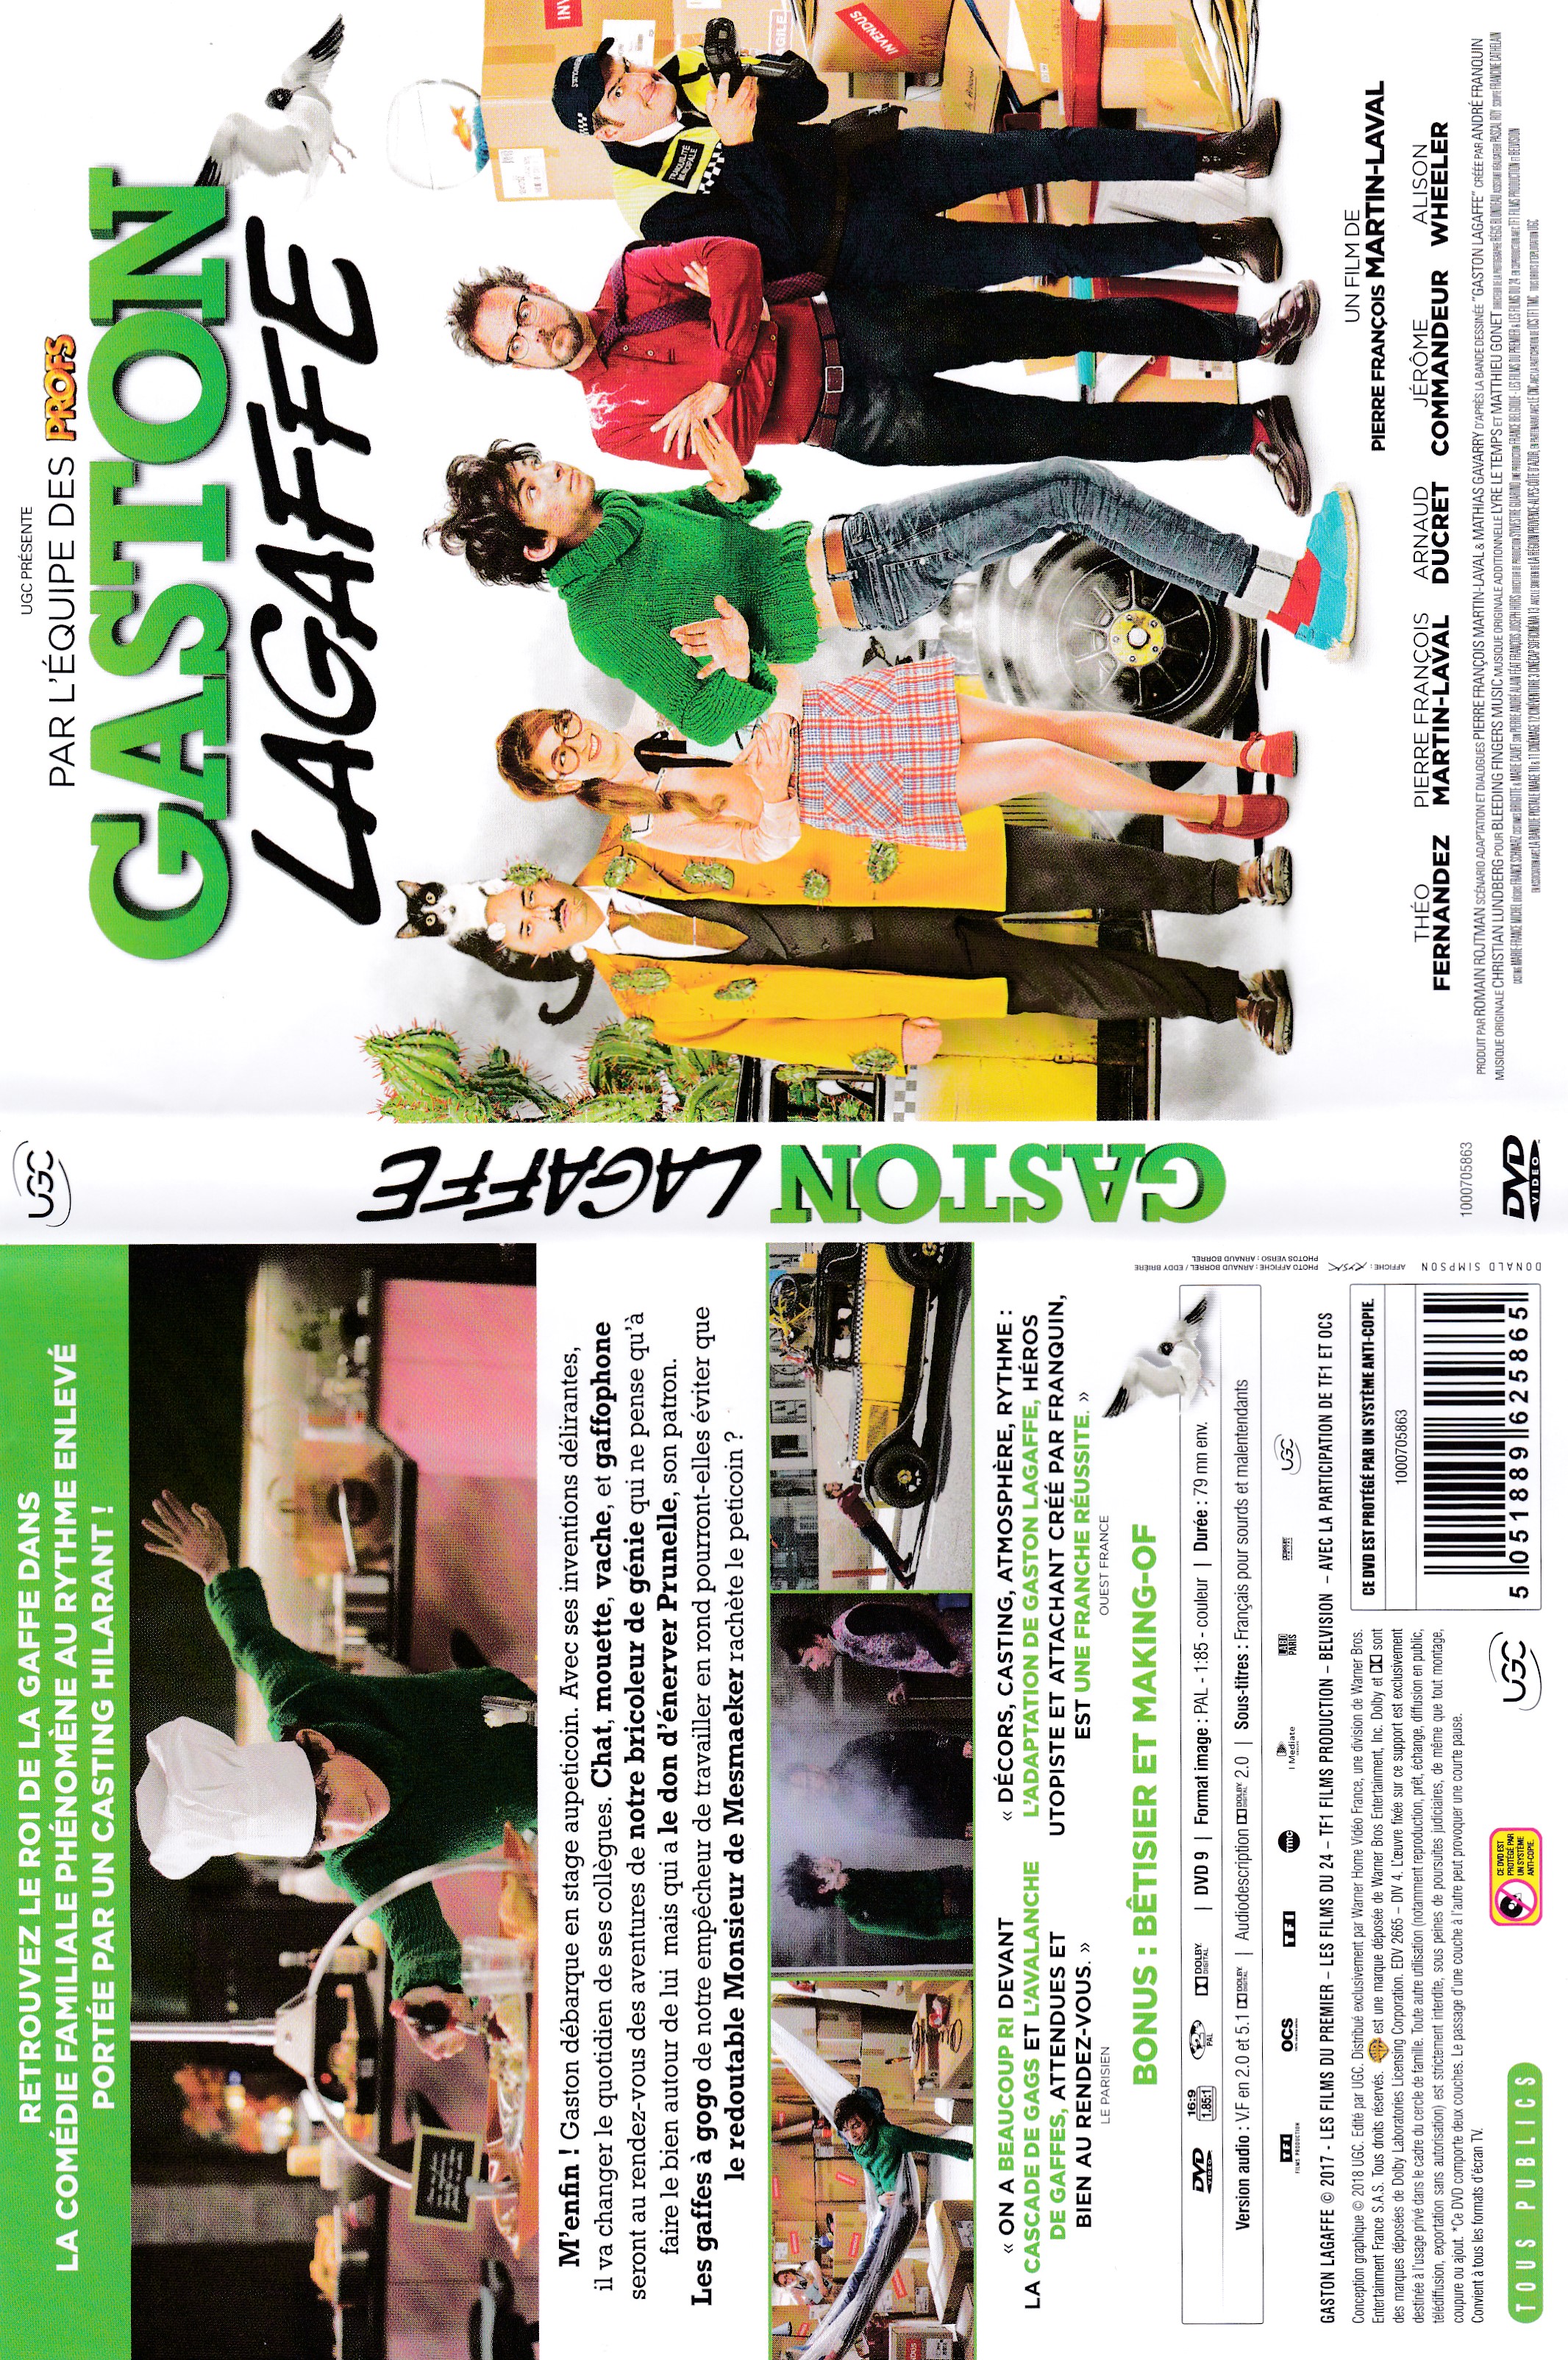 Jaquette DVD Gaston Lagaffe